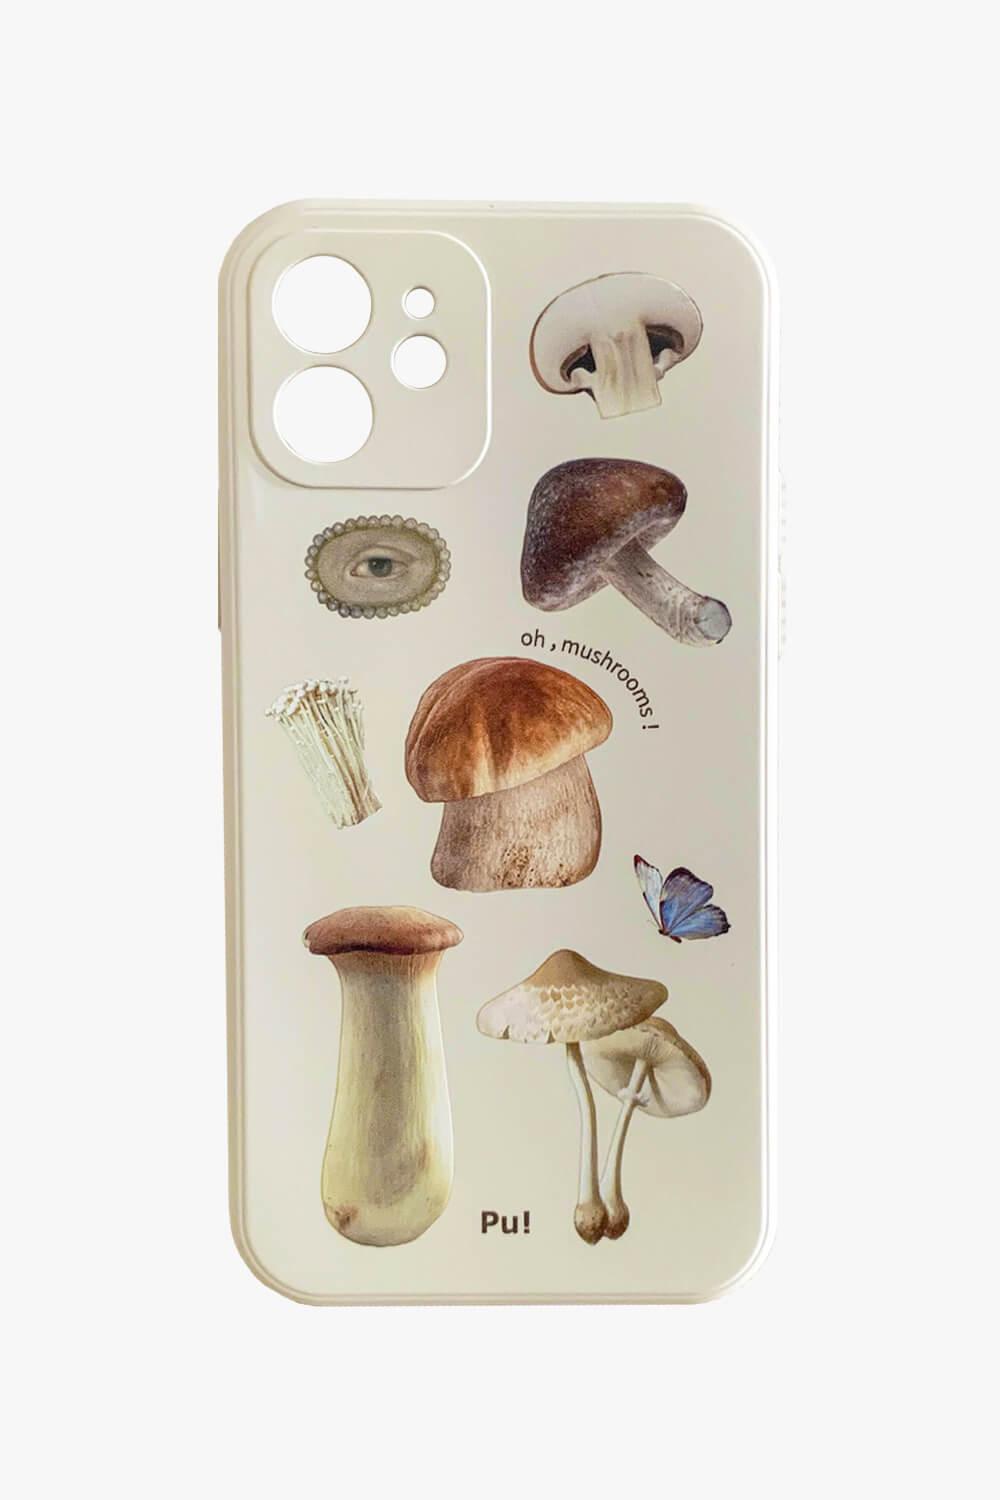 Eye Mushroom Aesthetic iPhone Case - Aesthetic Clothes Shop